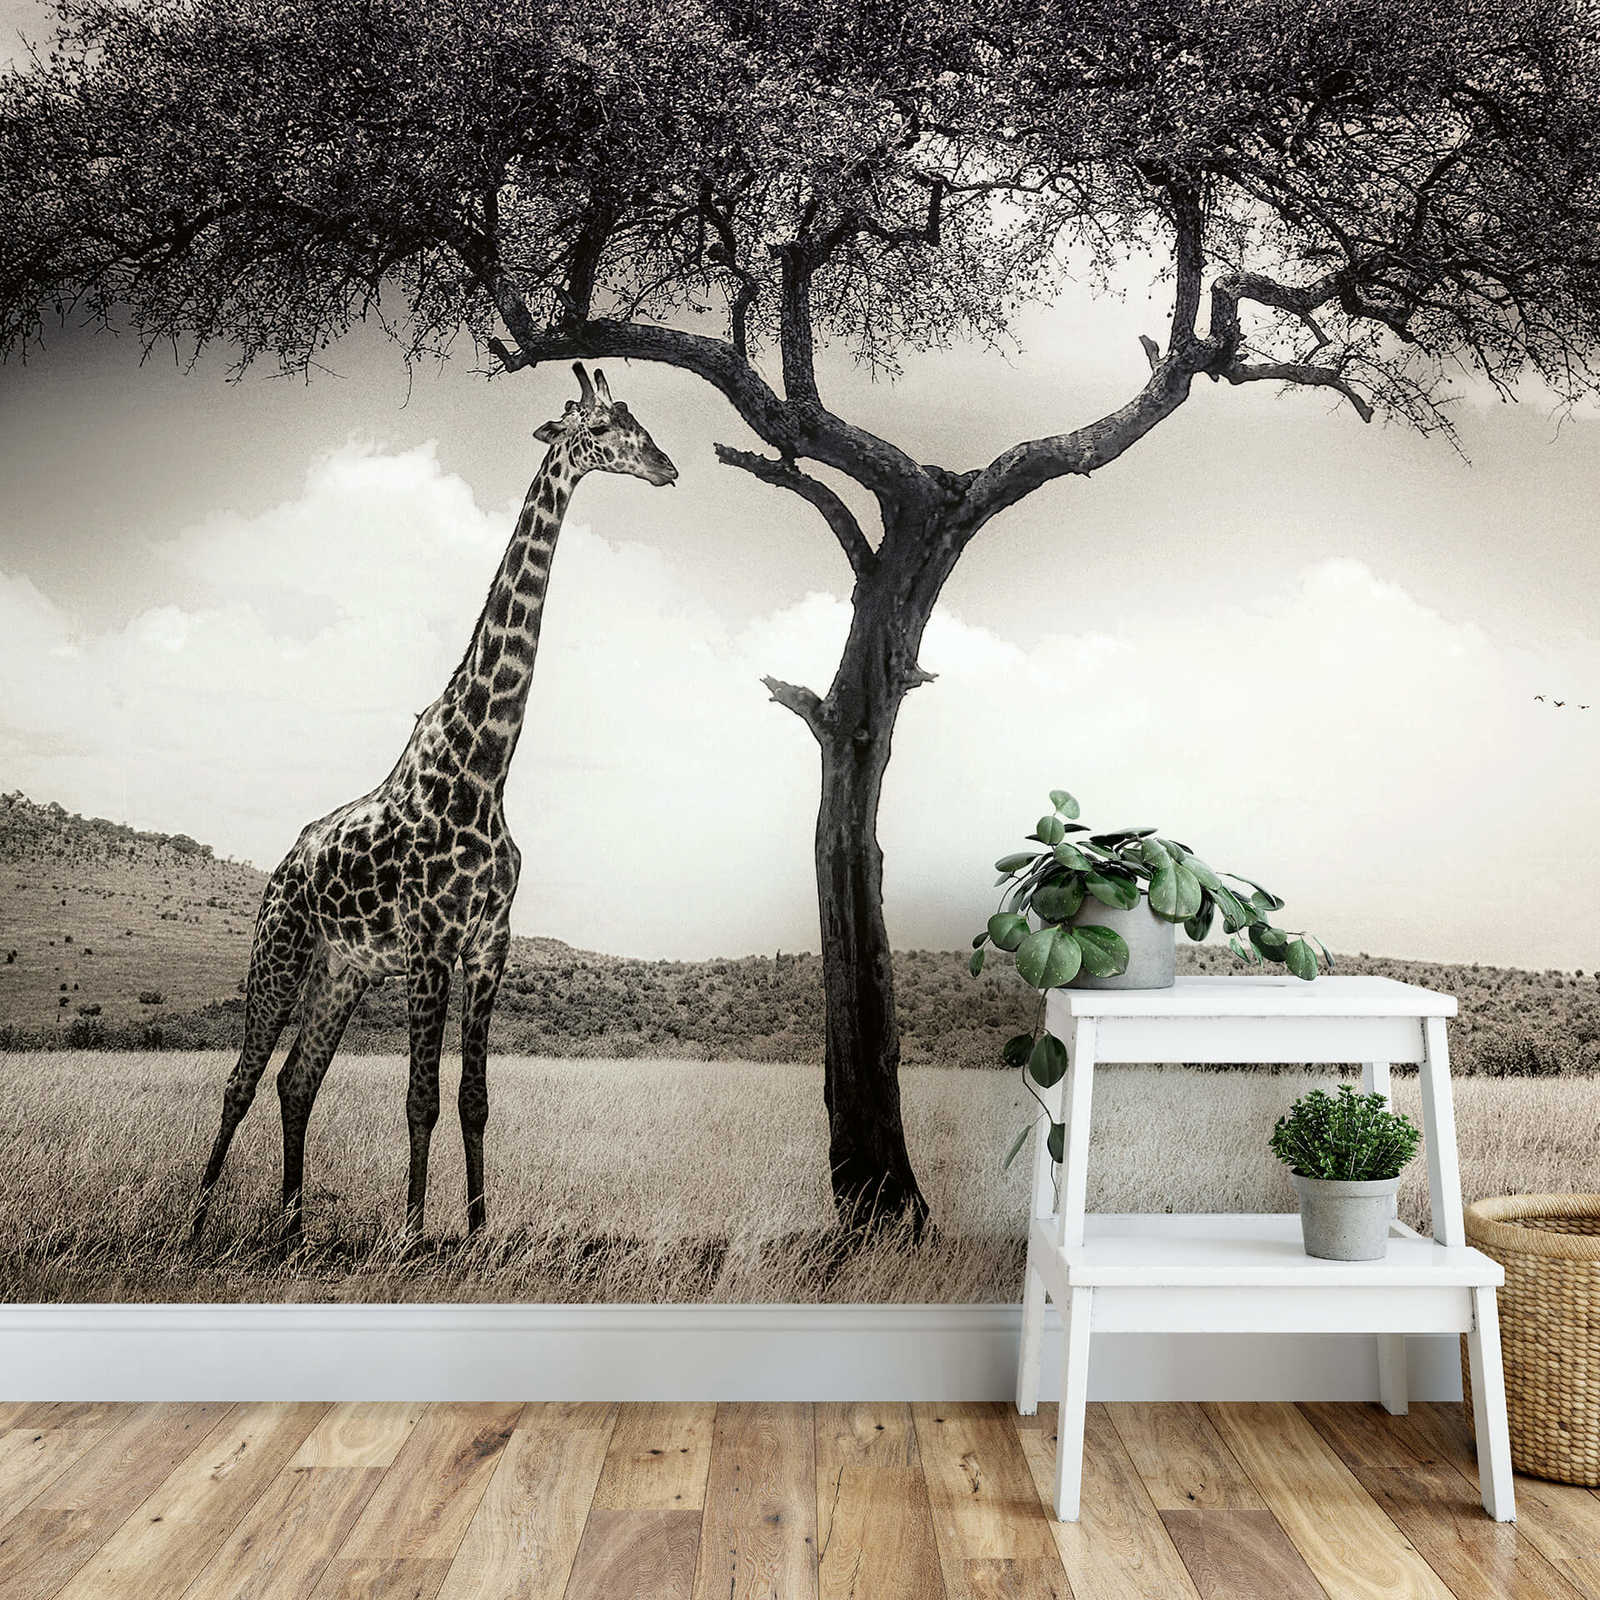             Photo wallpaper safari animal giraffe - grey, white, black
        